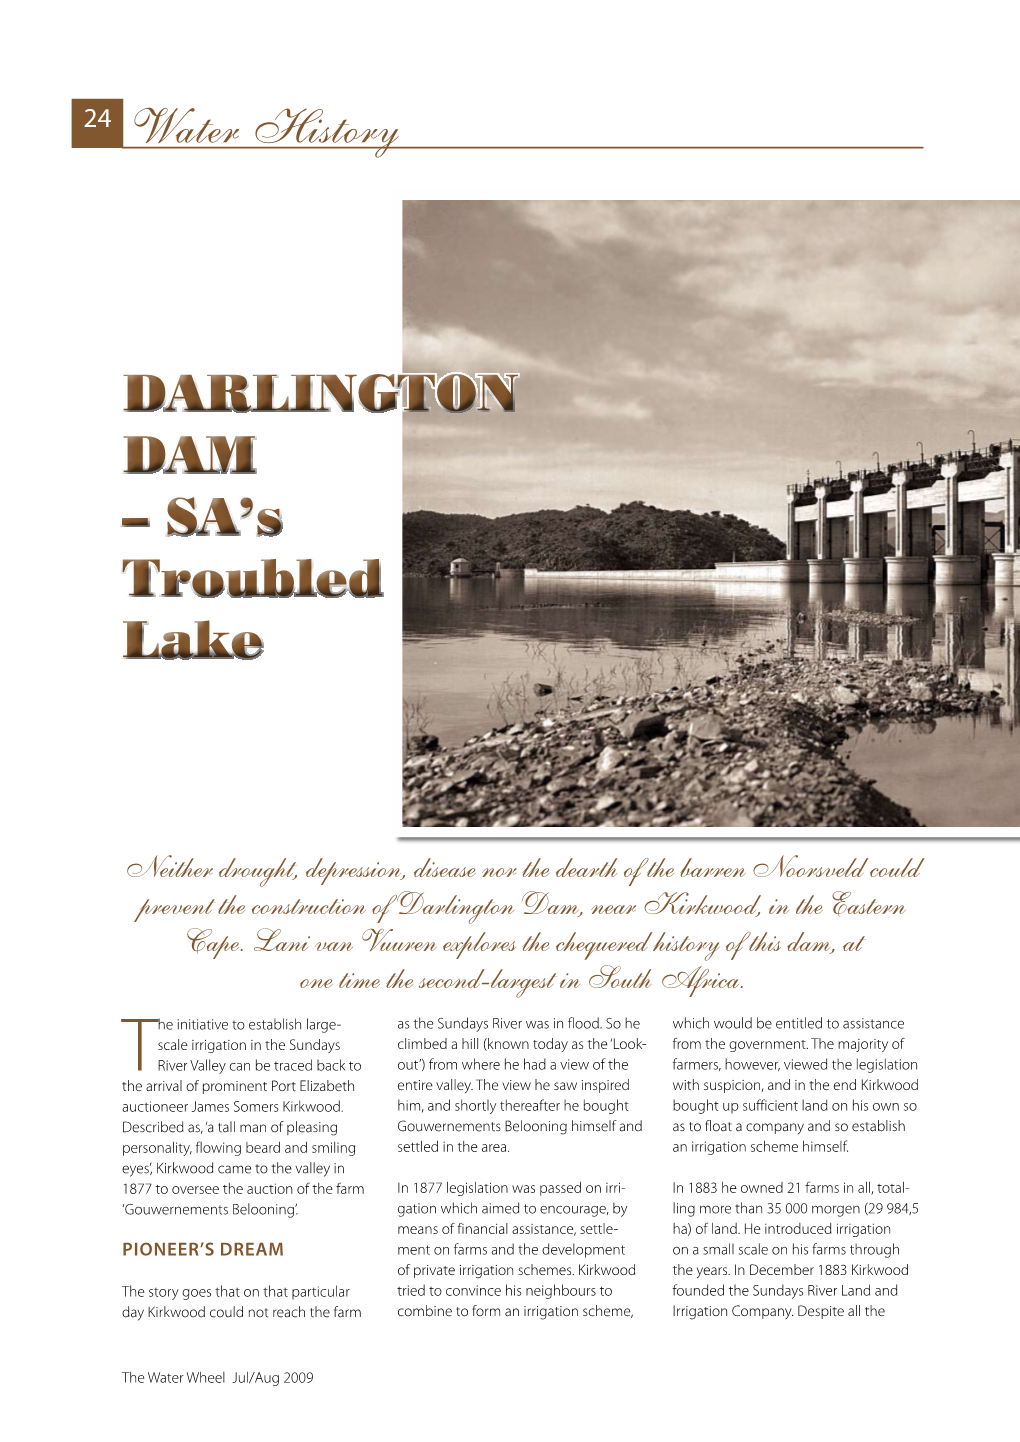 Darlington Dam – SA’S Troubled Lake